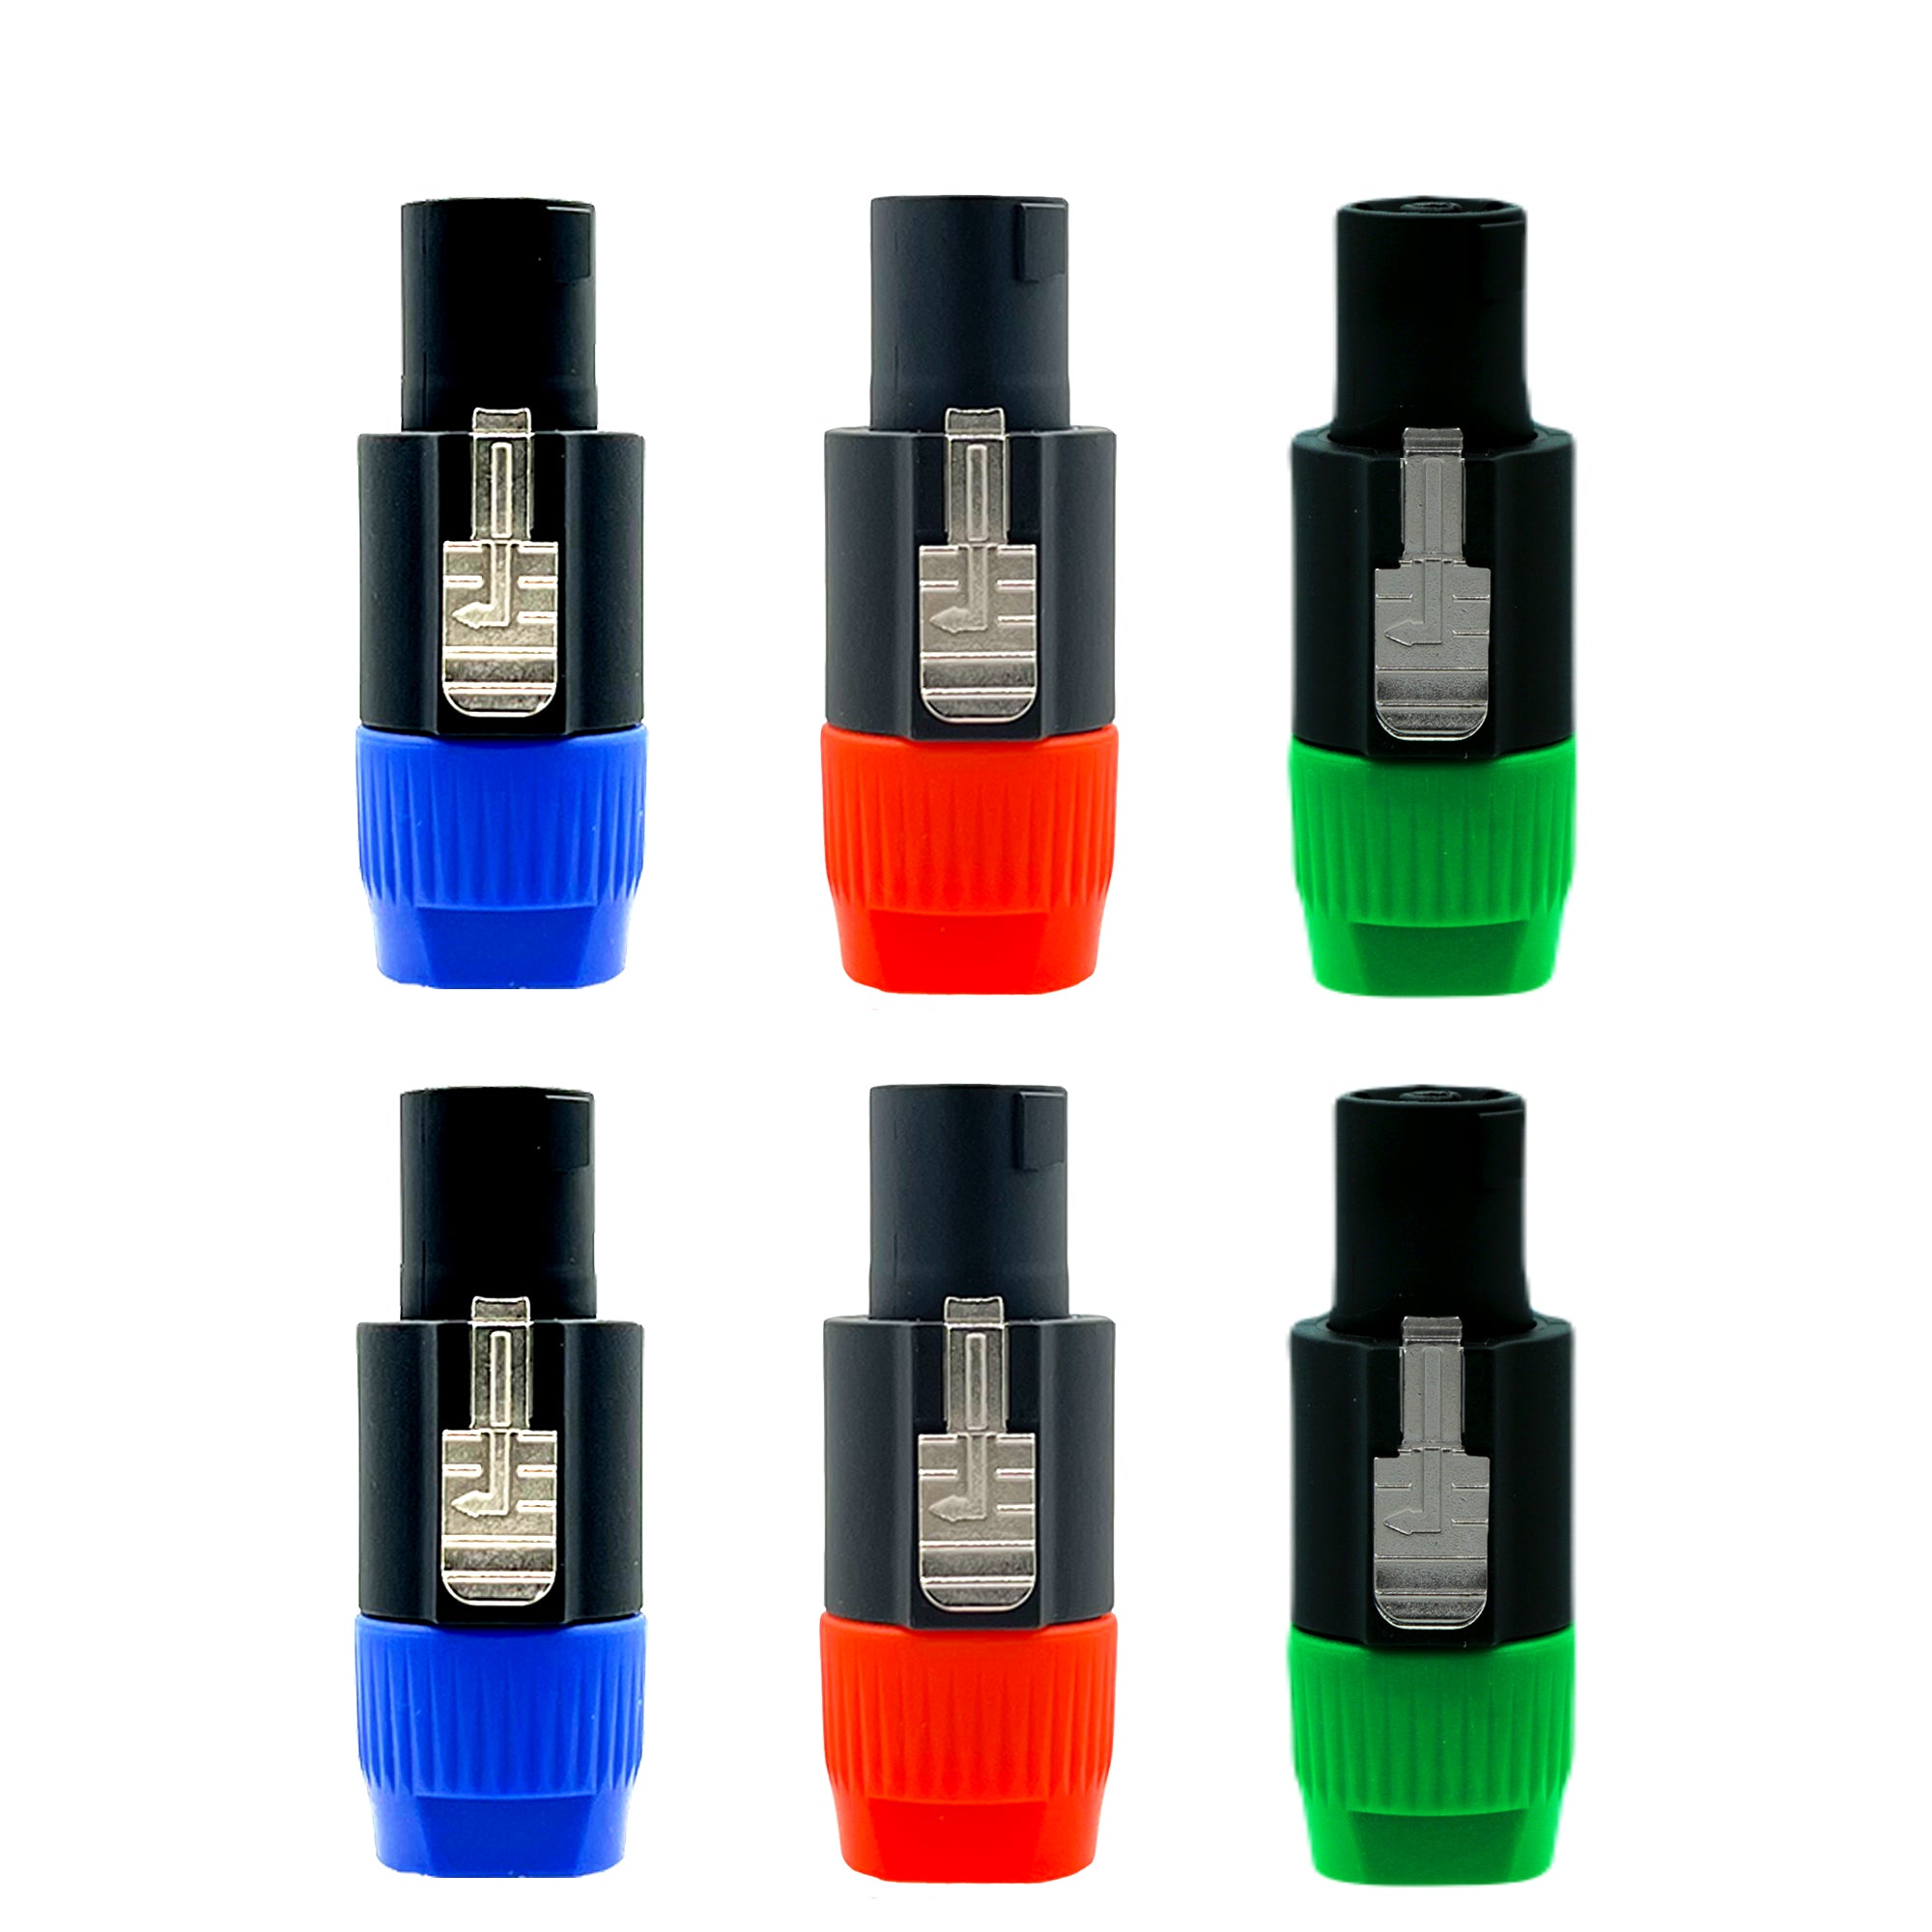 5 Core Speakon Adapter Connectors 4 Pole Plug Twist Lock | 2x Blue, 2x Green, 2x Orange 6 Pack - SPKN BGO 6PK